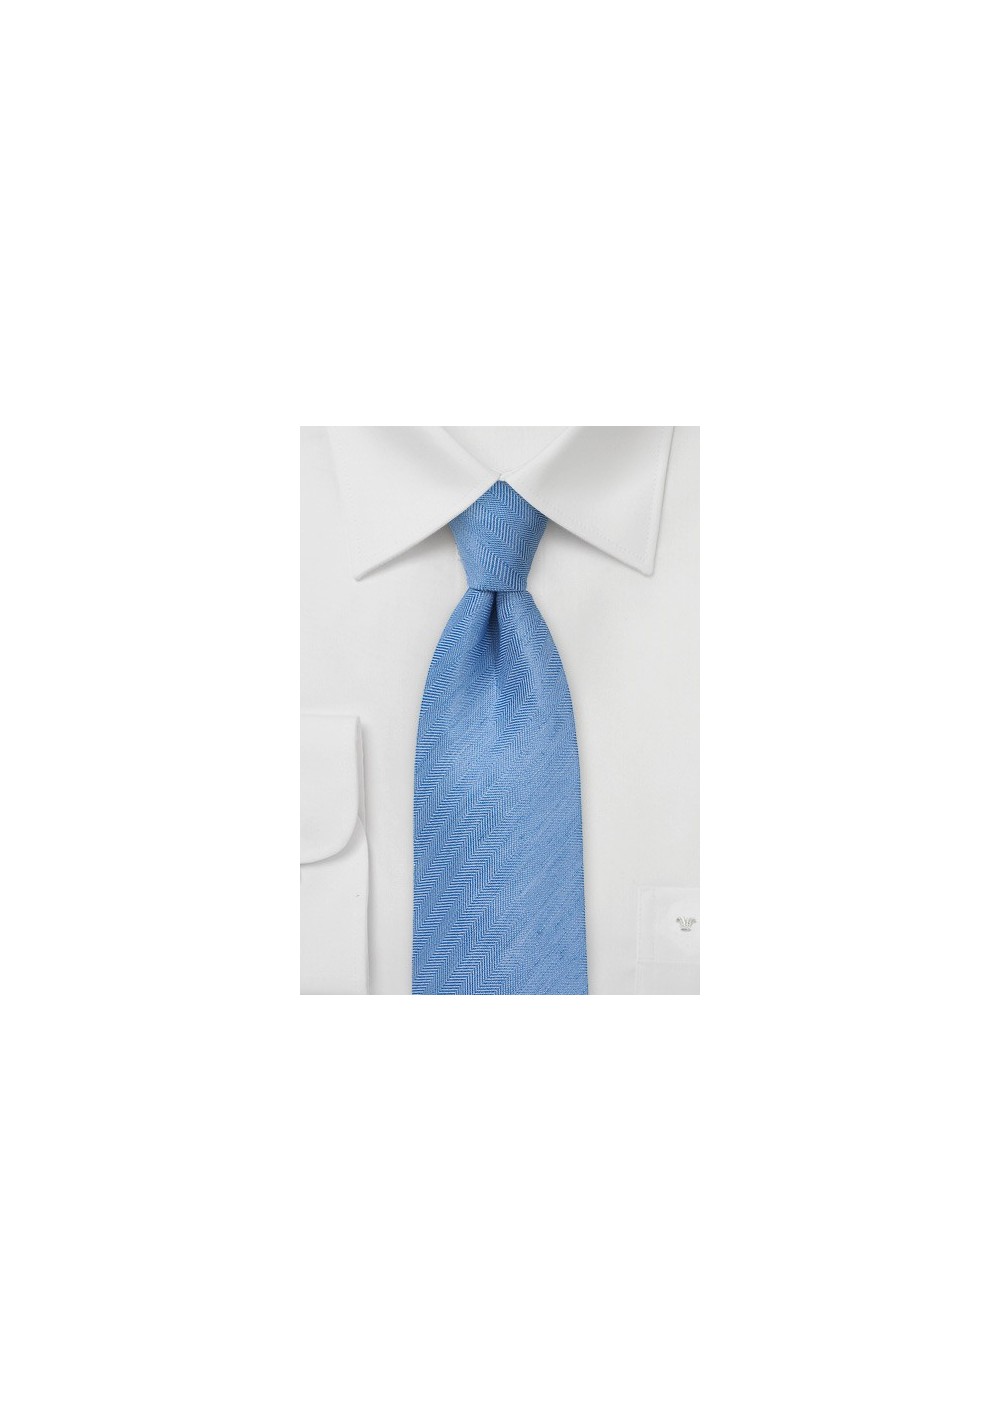 Woven Herringbone Linen Tie in Light Blue